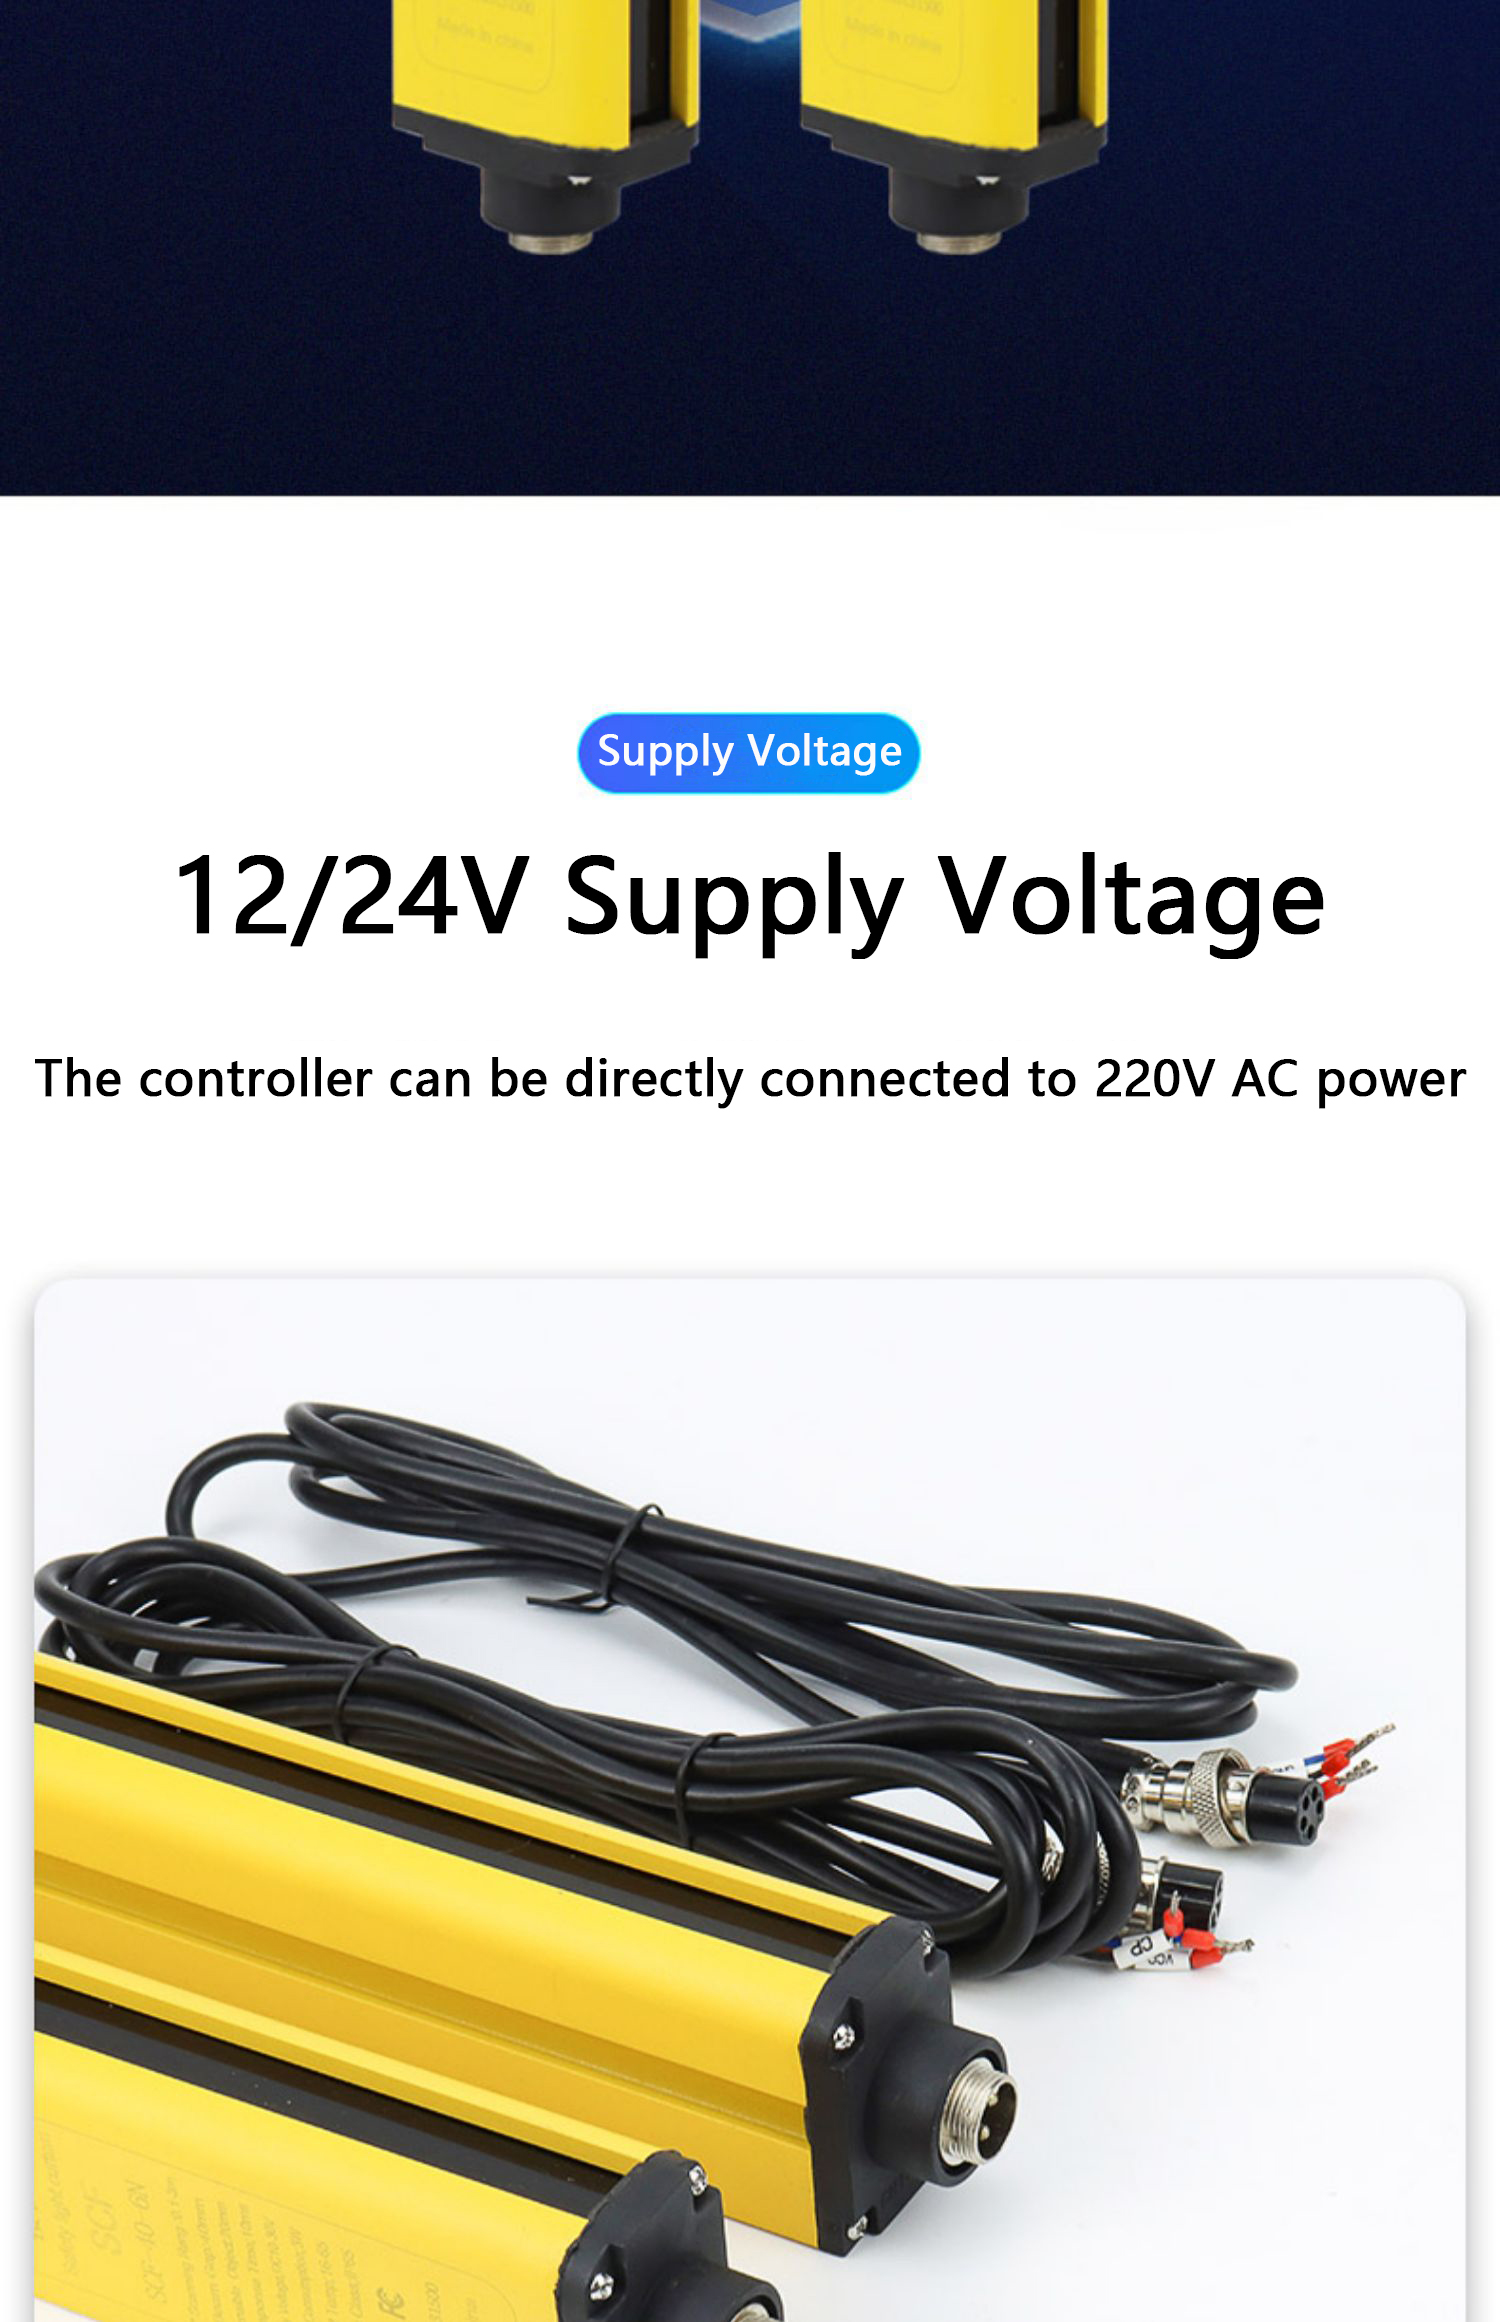 12-24v supply voltage